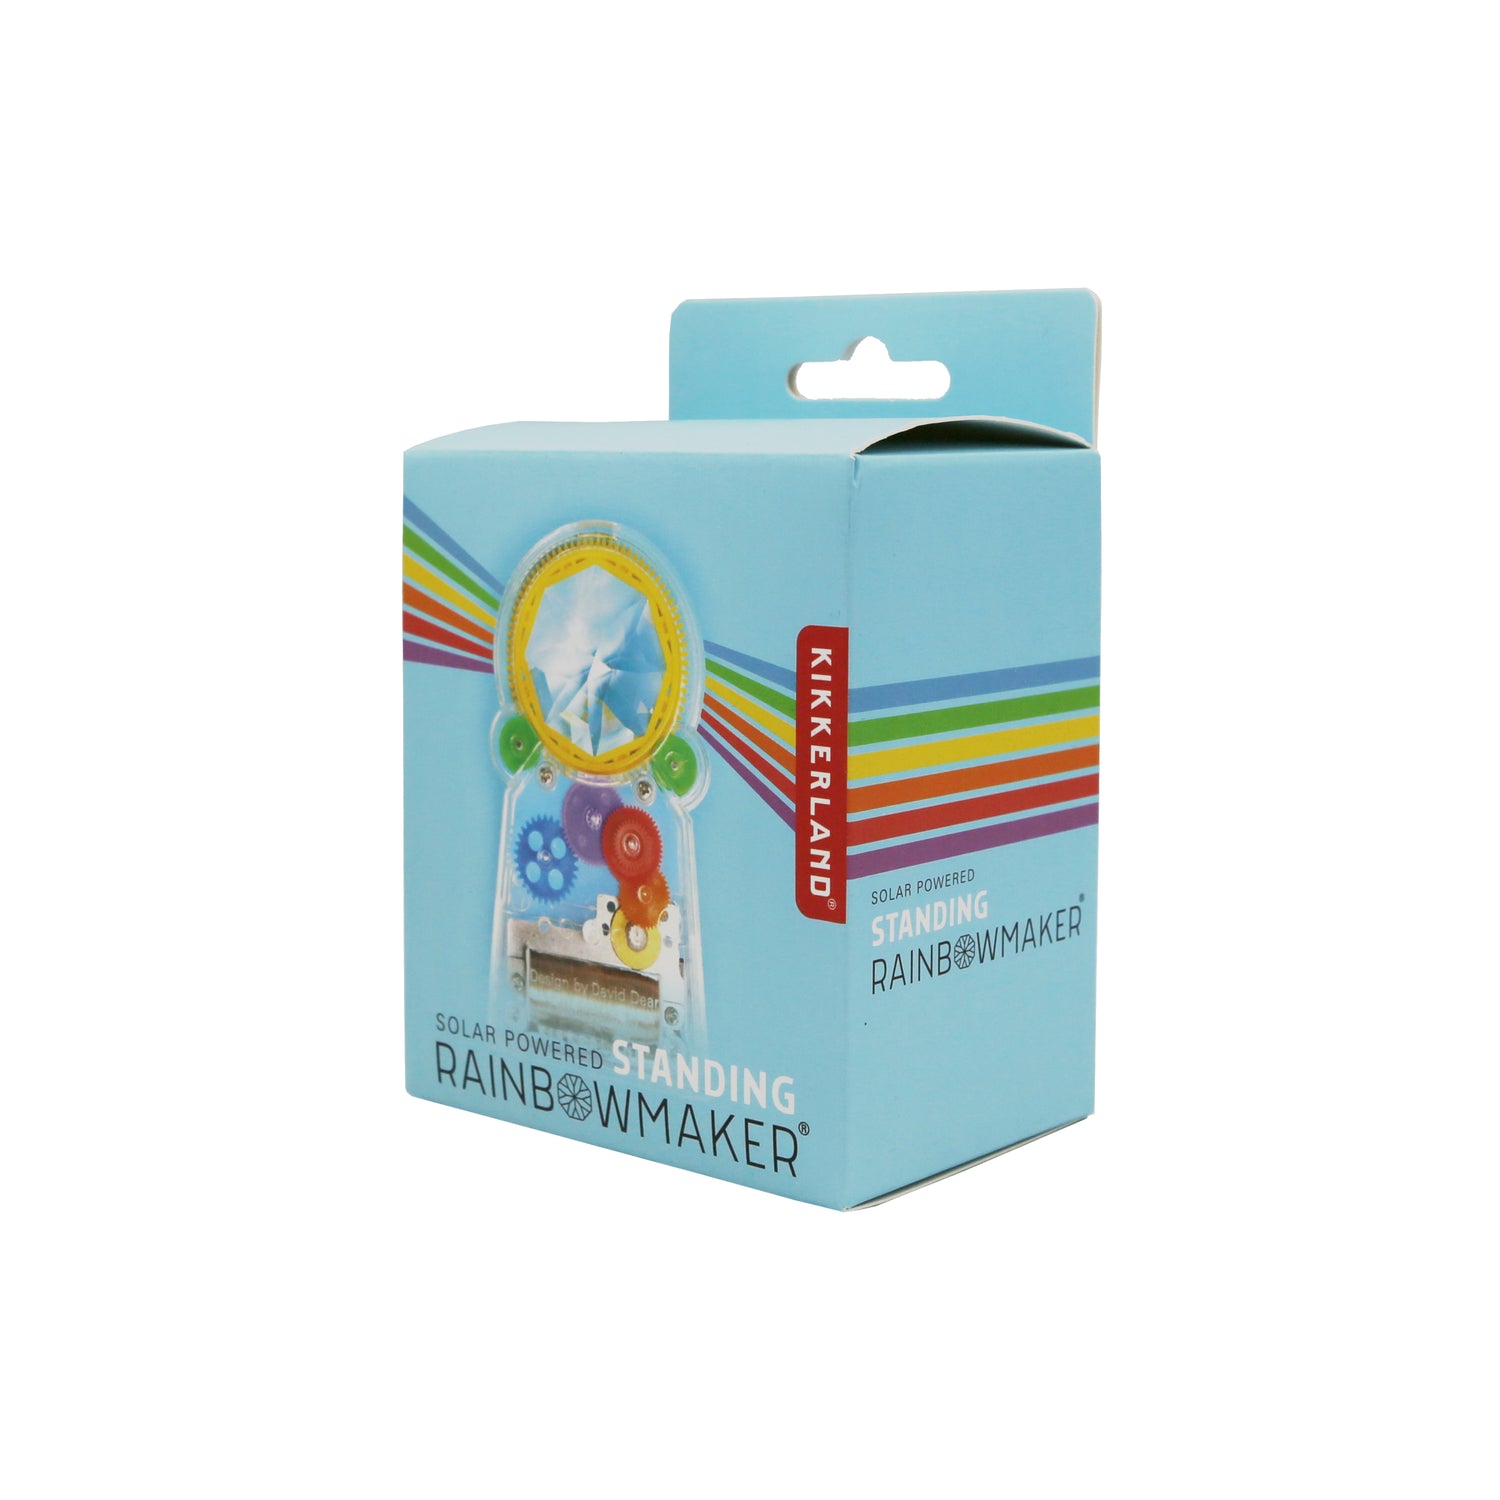 Staande RainbowMaker® op zonne-energie